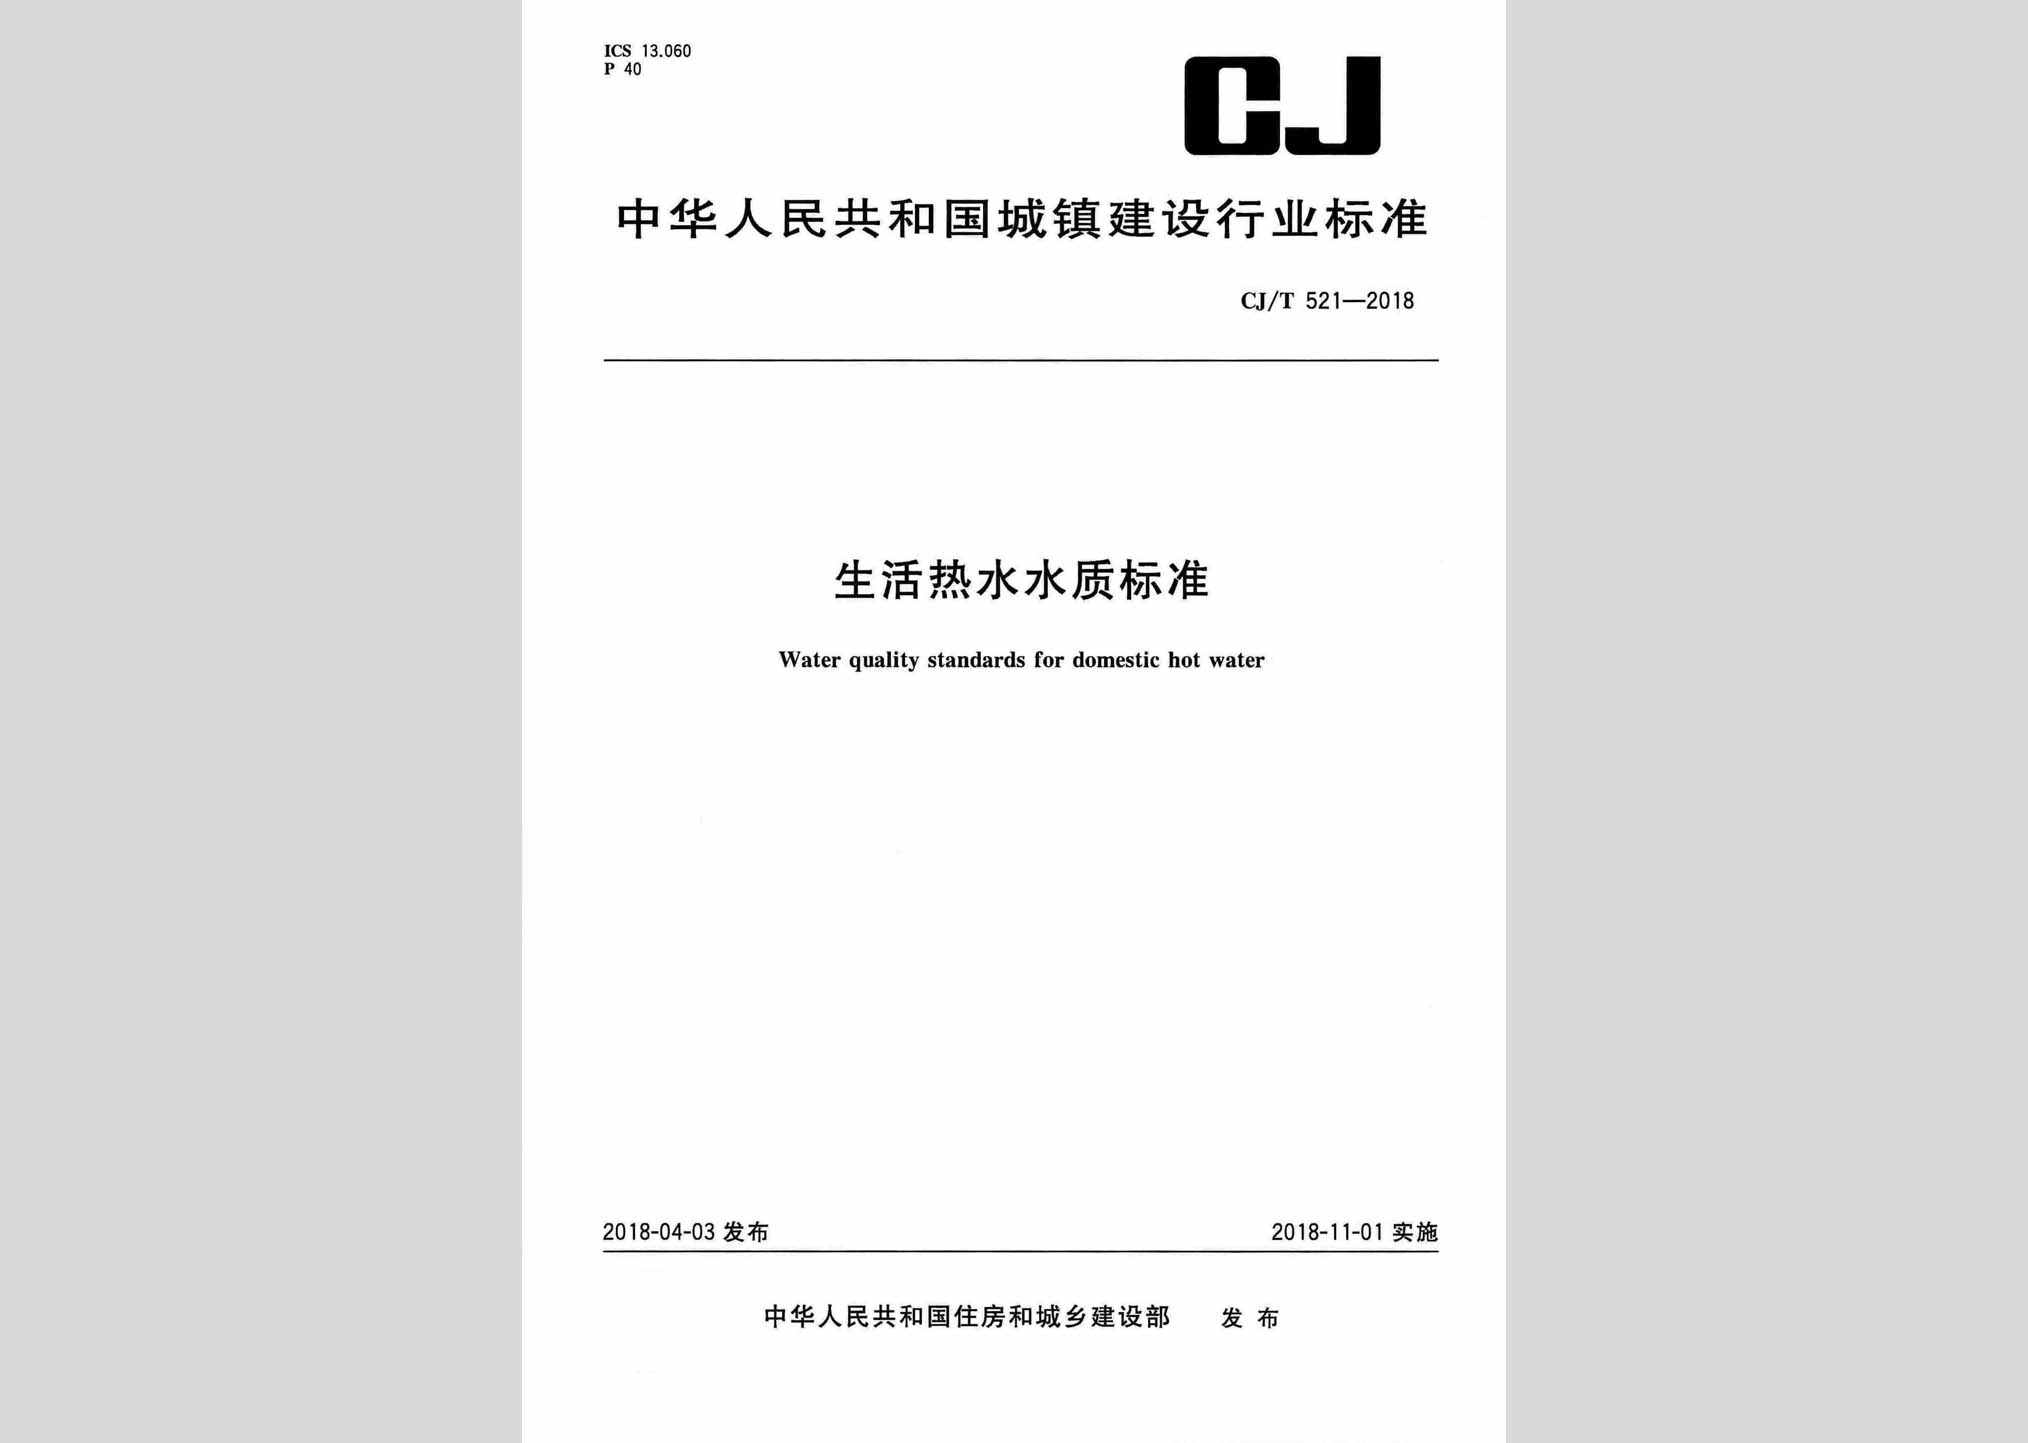 CJ/T521-2018：生活热水水质标准